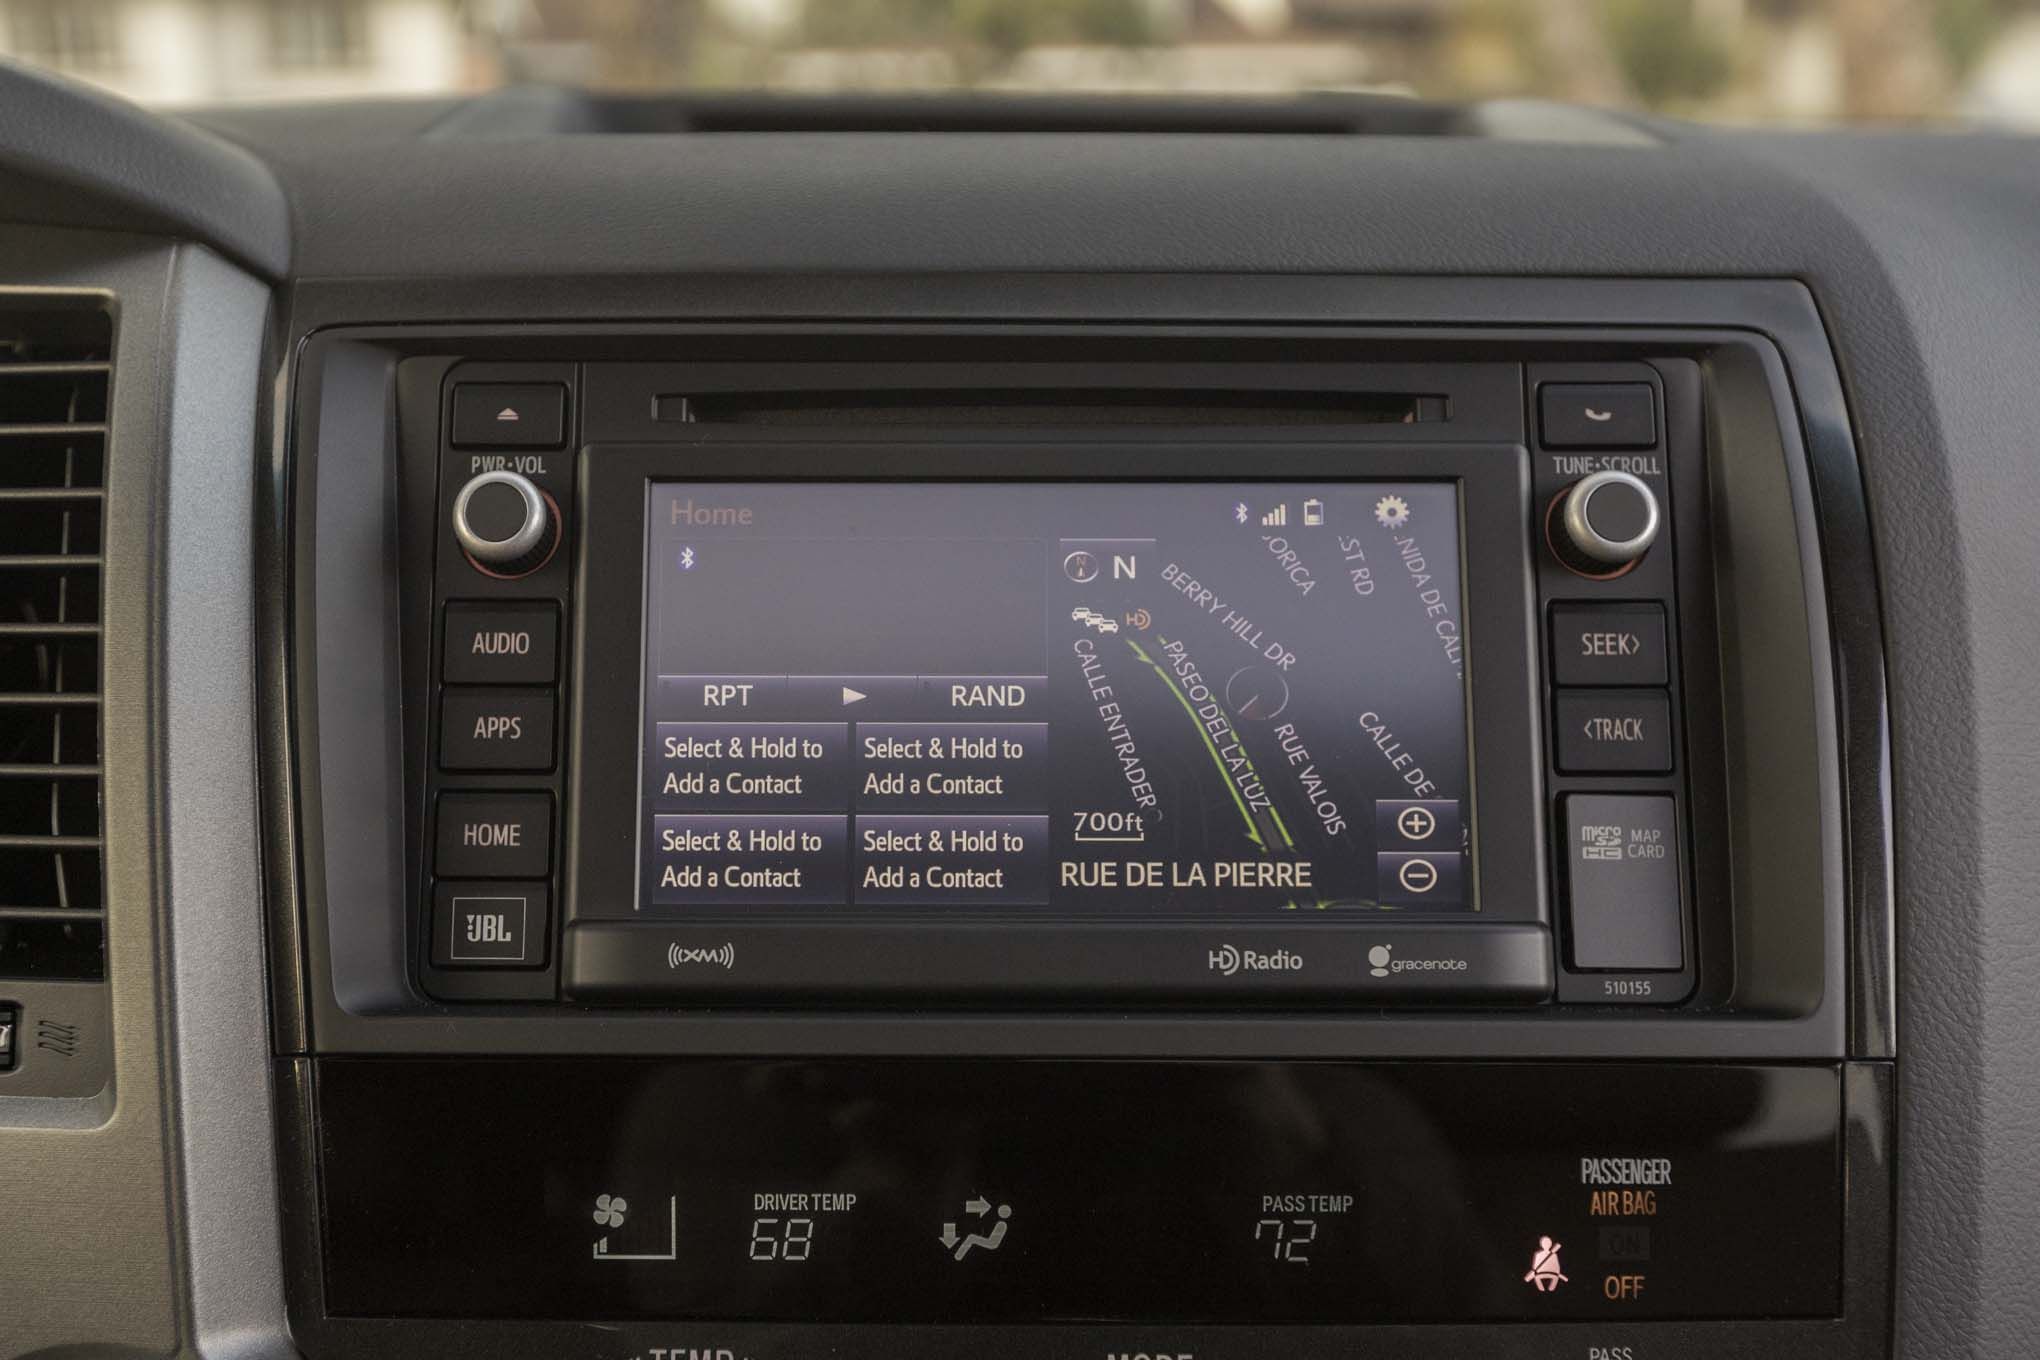 2017 Toyota Sequoia 4×4 Platinum Interior View Center Headunit Screen (View 23 of 26)